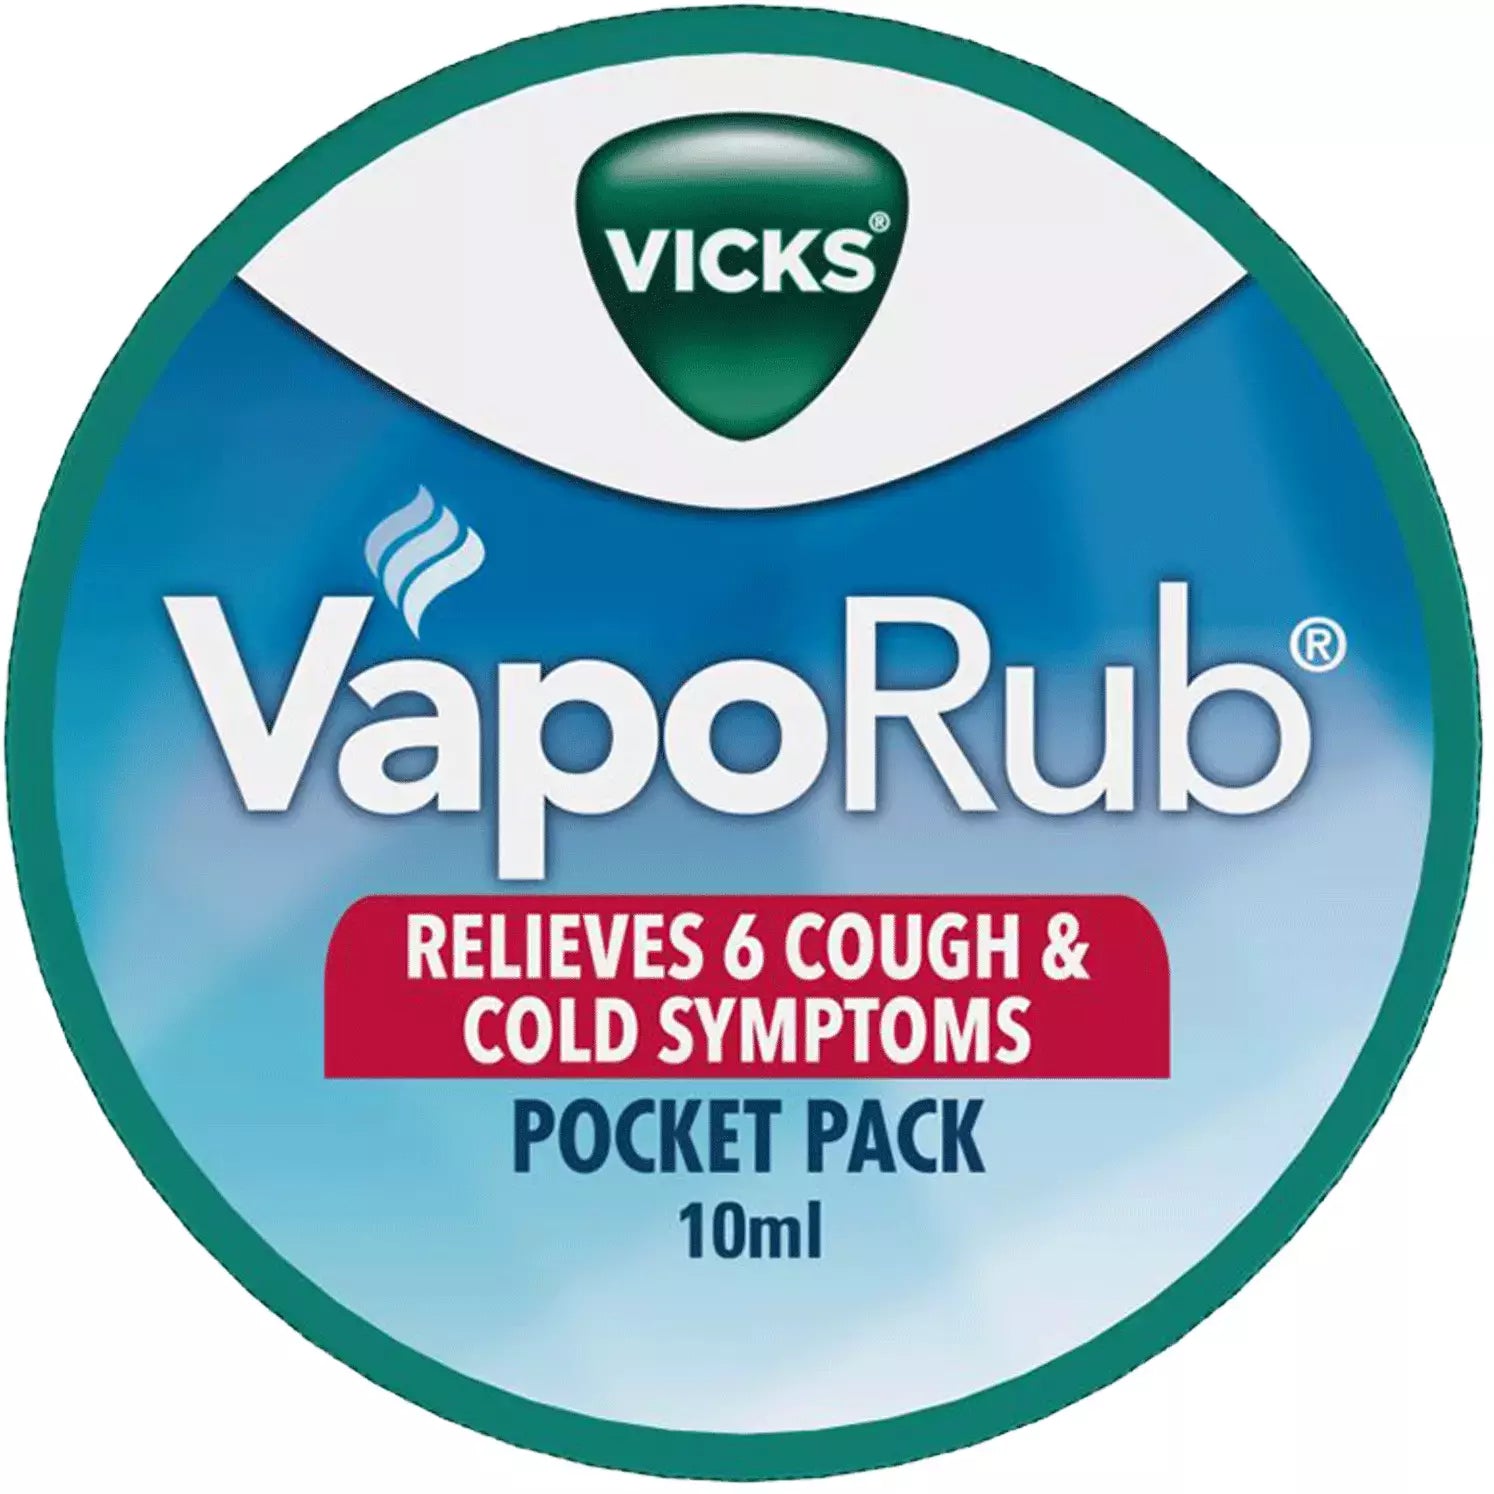 Vicks Vaporub Pocket Pack 10ml